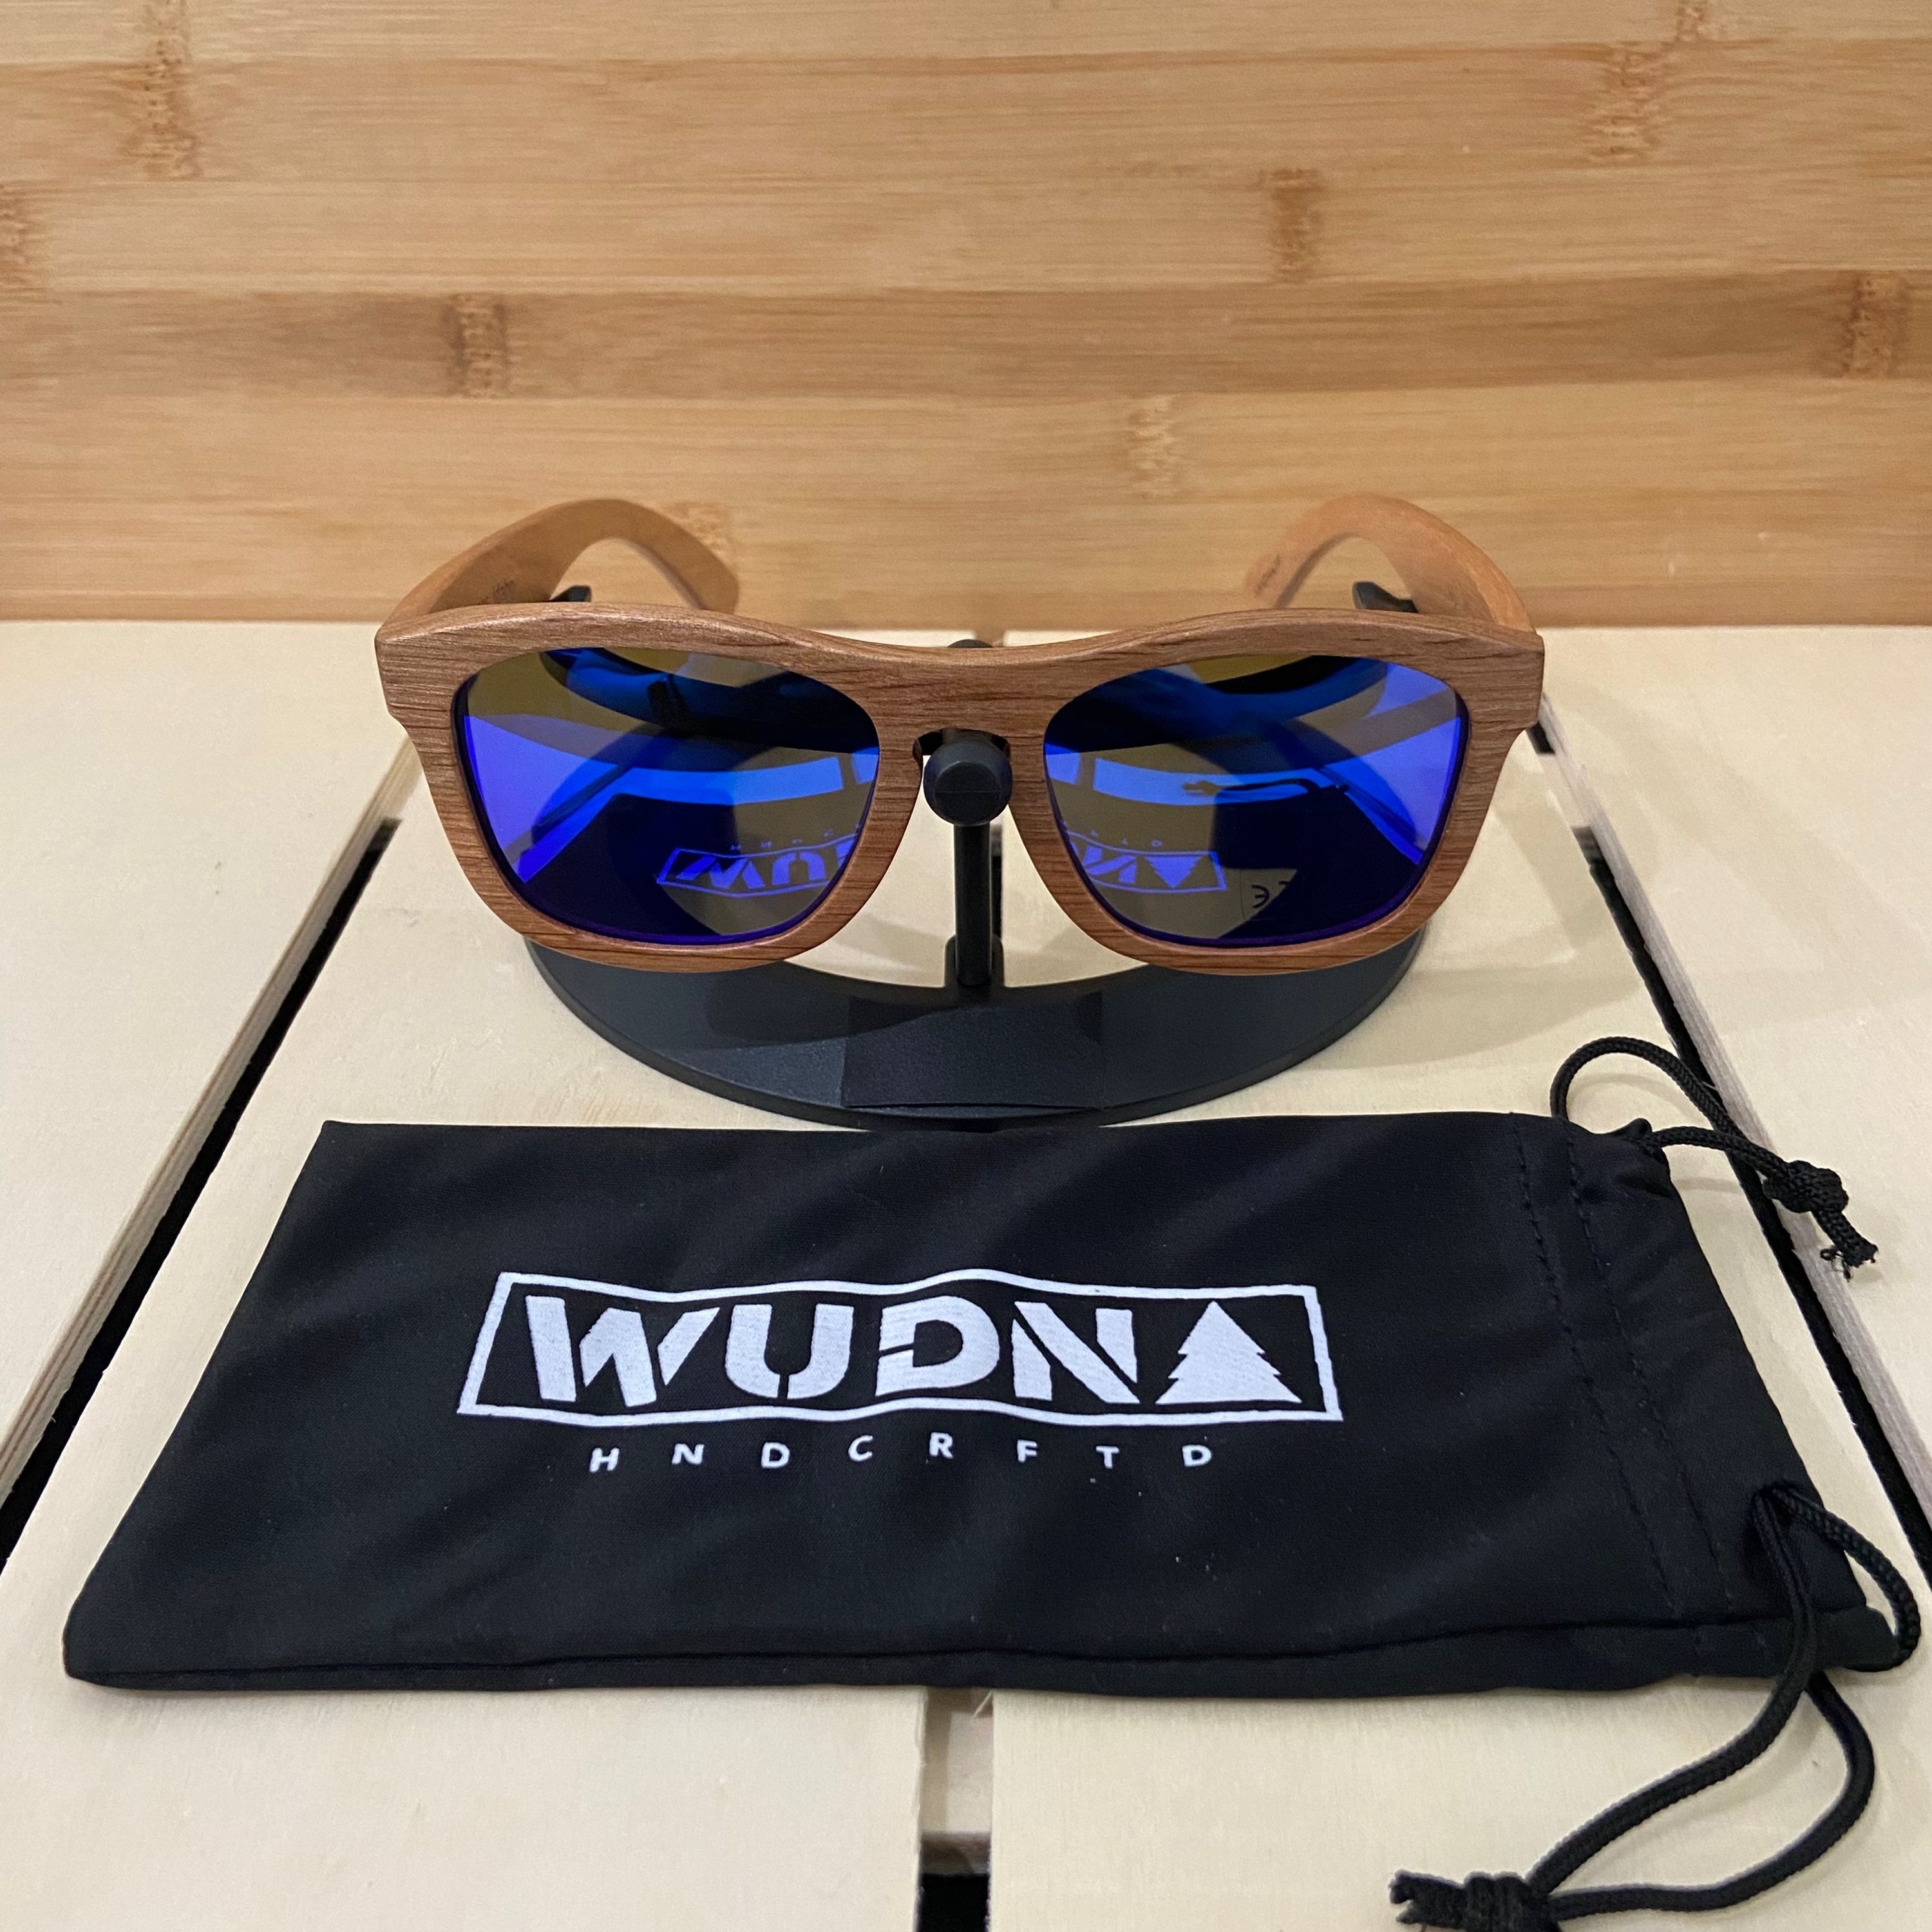 WUDN Sunglasses All Wood Jacks Real Zebra Light Brown Frame with Blue Lens